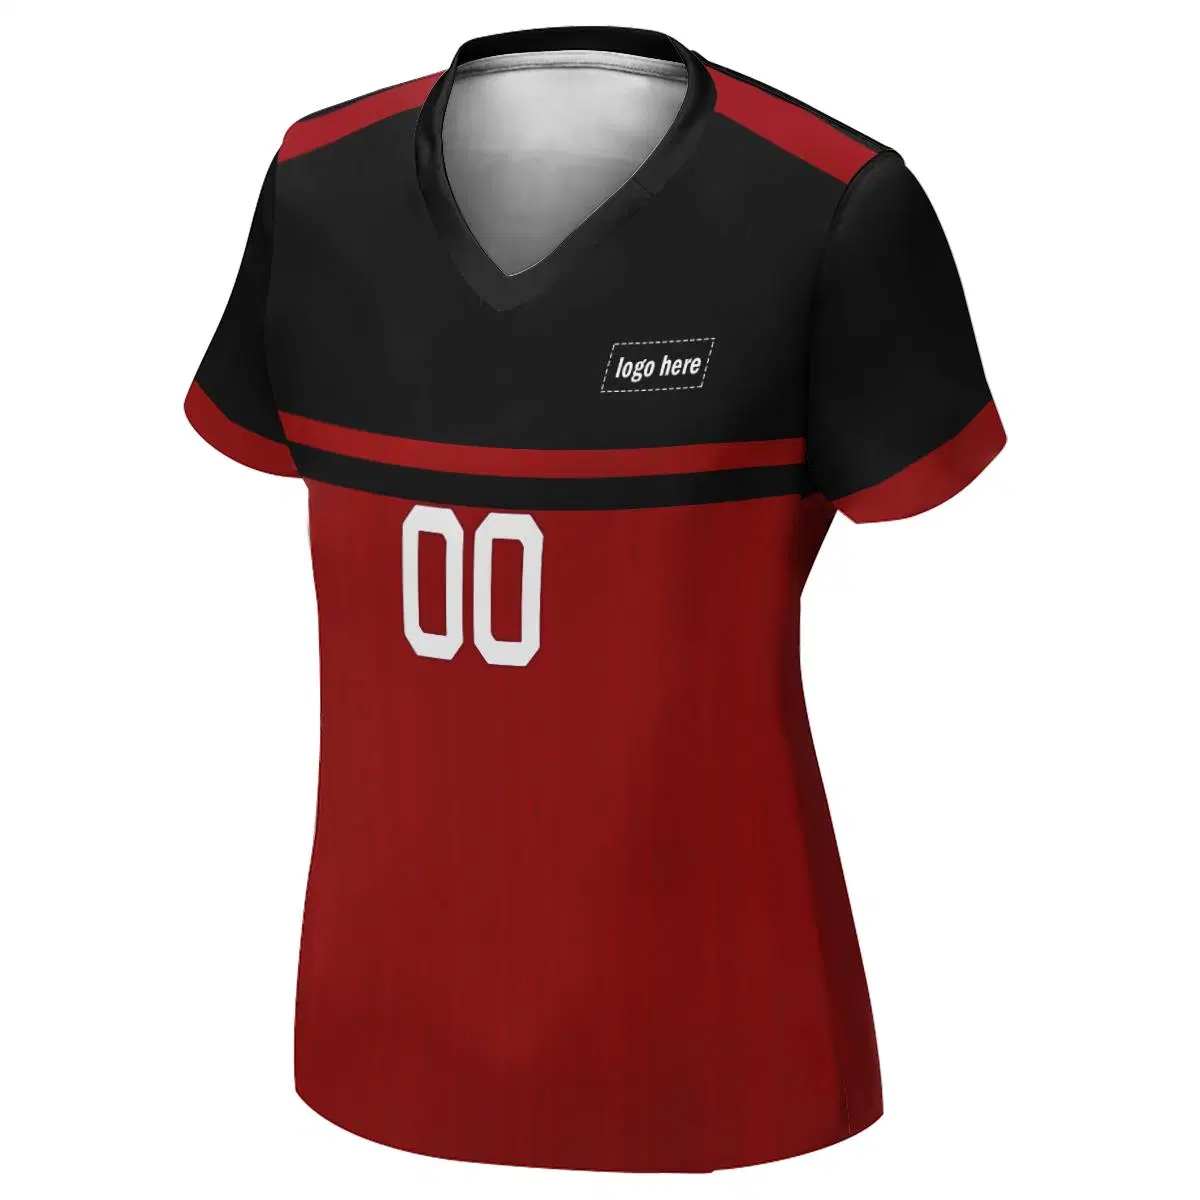 Logo de l'équipe personnalisé Femmes Hommes Athletic Football Basketball Jersey Jersey Drop-Shipping Impression sur demande Sports wear